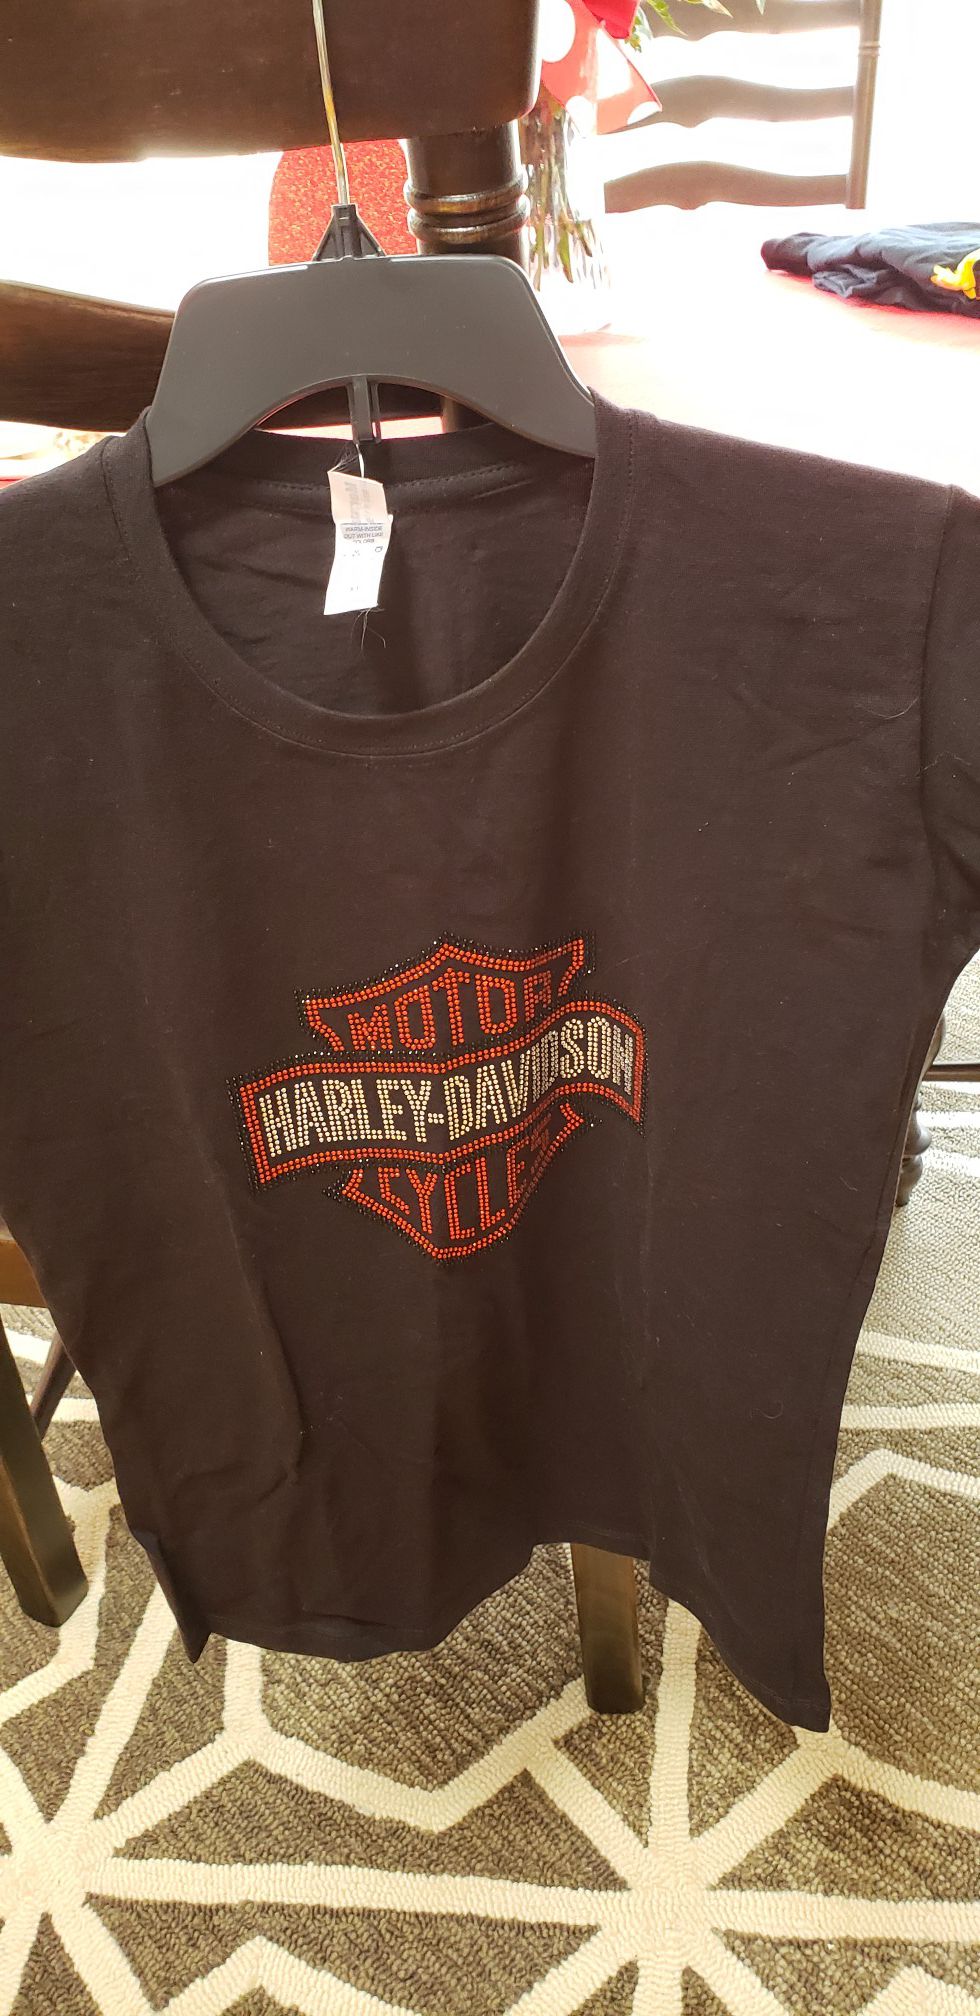 Harley Davidson shirts